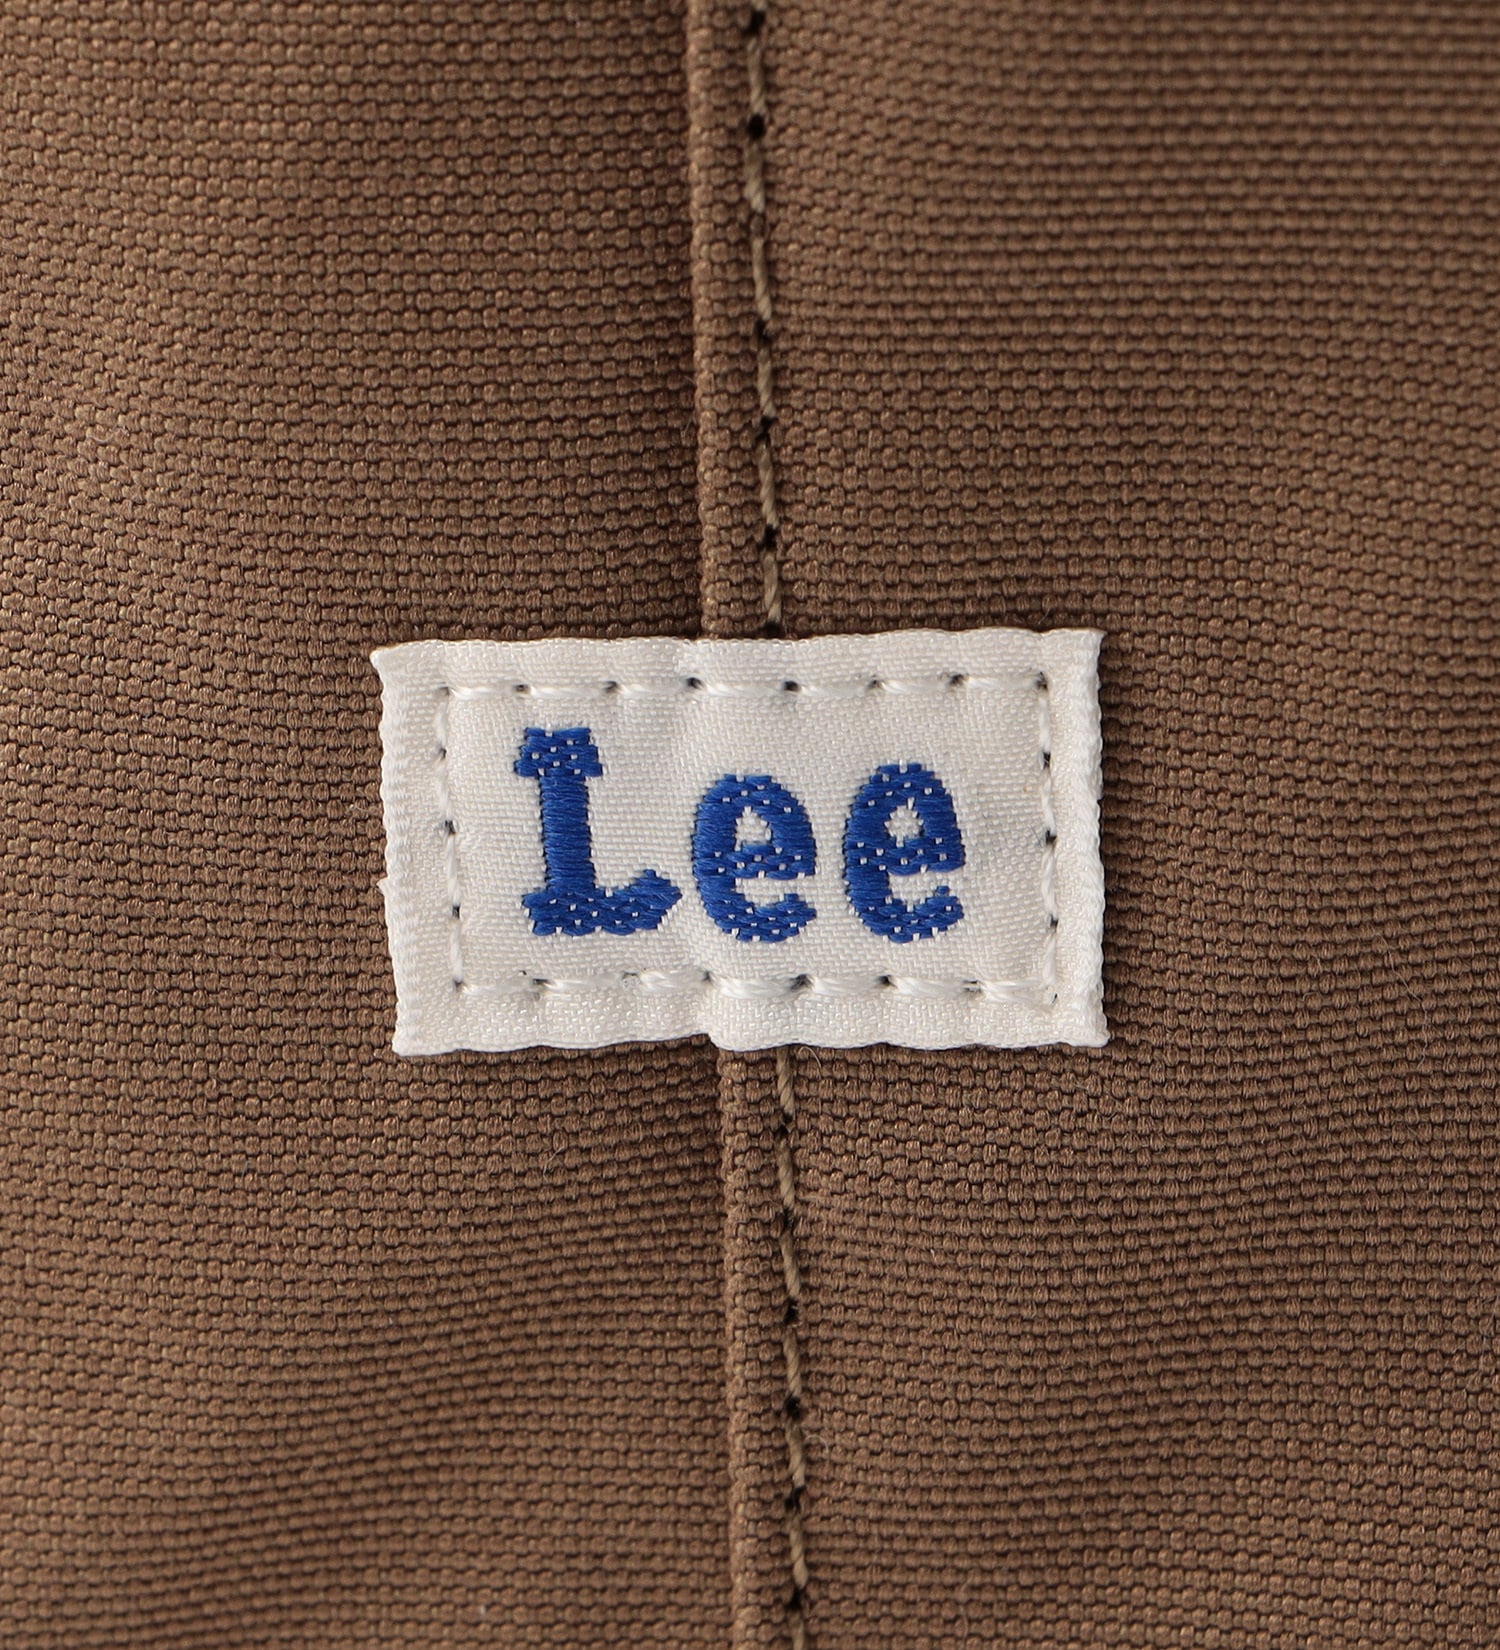 Lee(リー)のスクエアリュック|バッグ/バックパック/リュック/メンズ|モカ